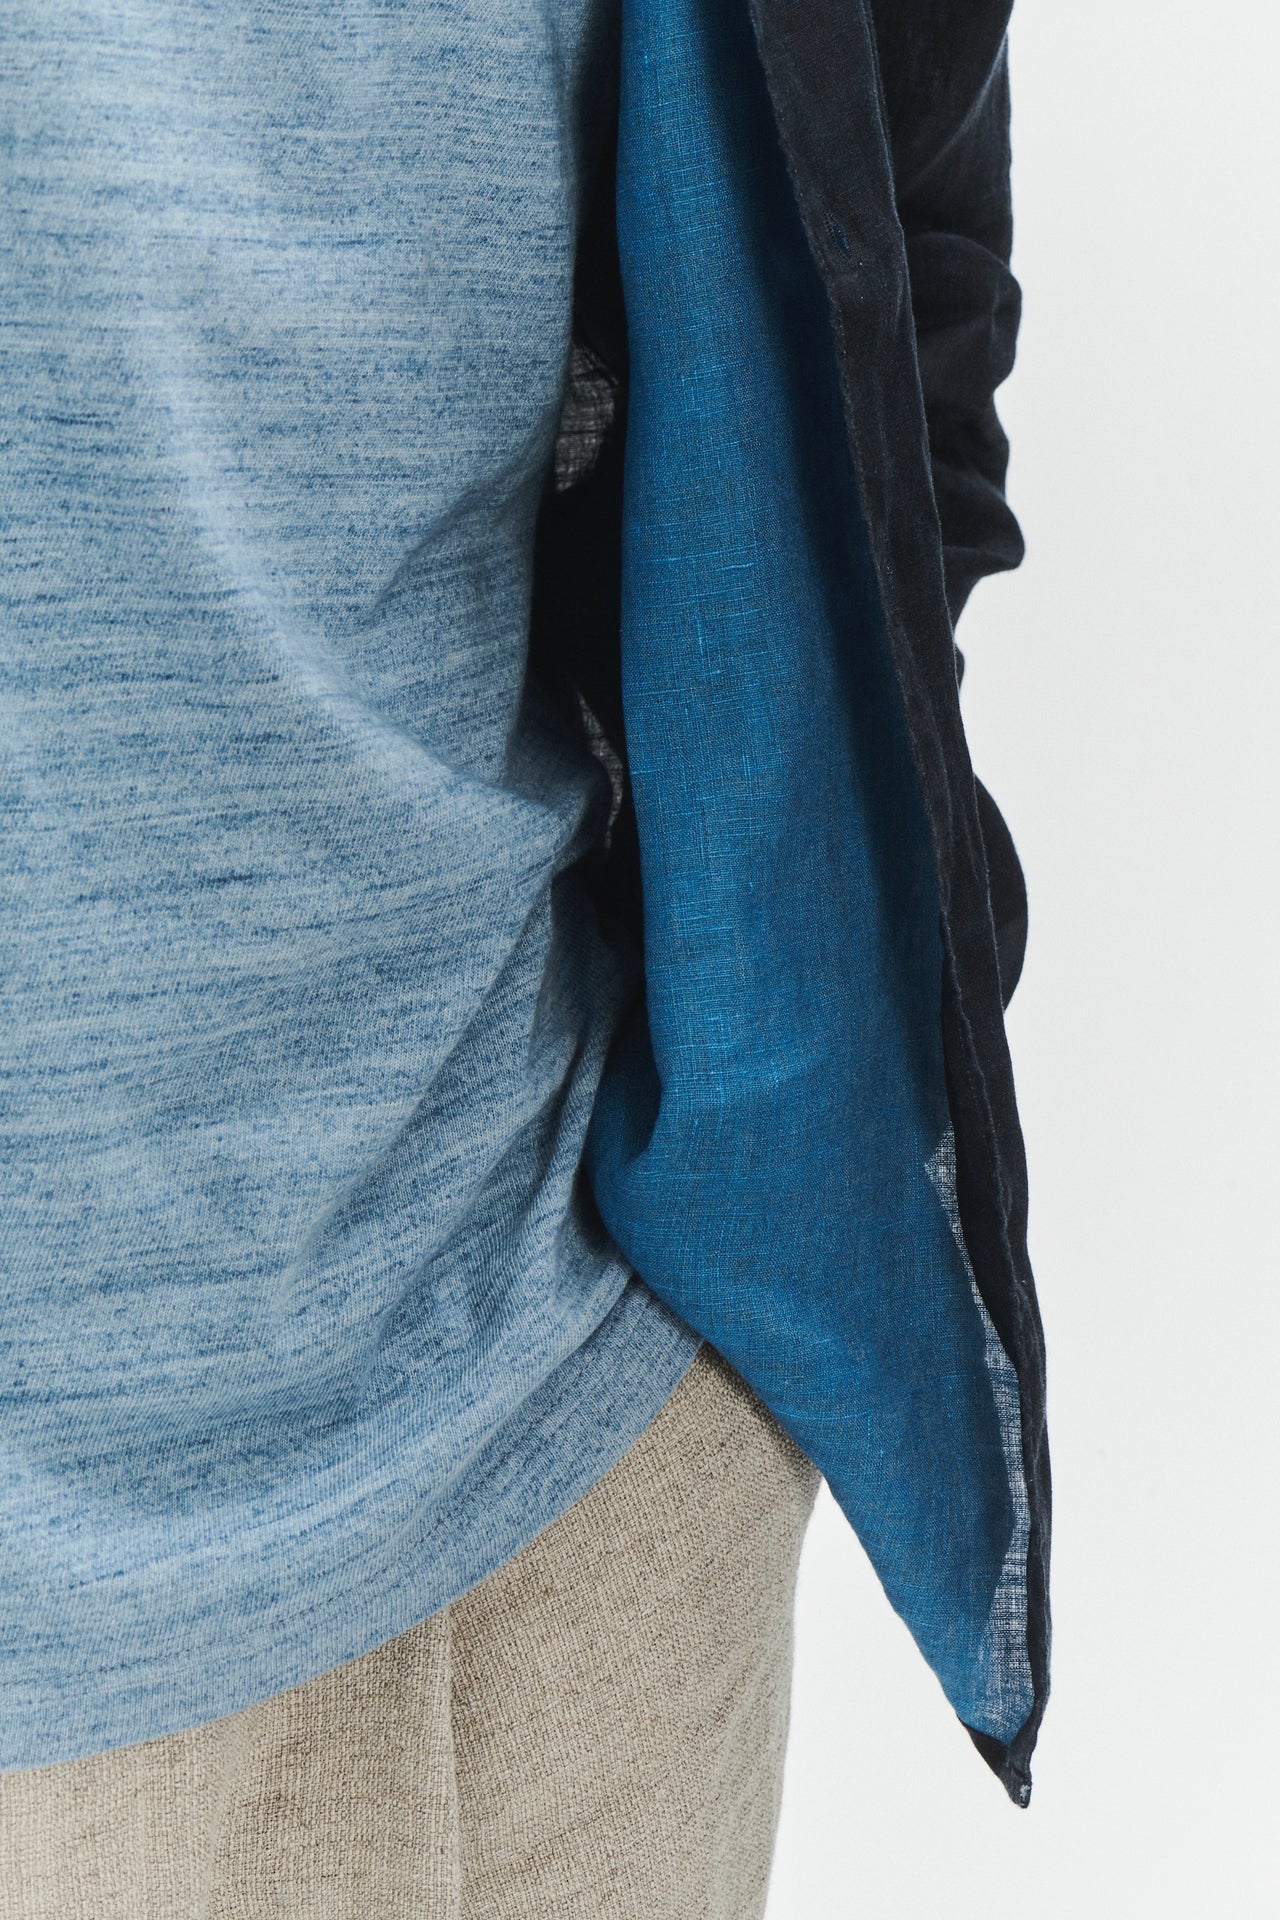 Long Sleeve Oversized Boxy Shirt in Double Sided Pure Italian Linen